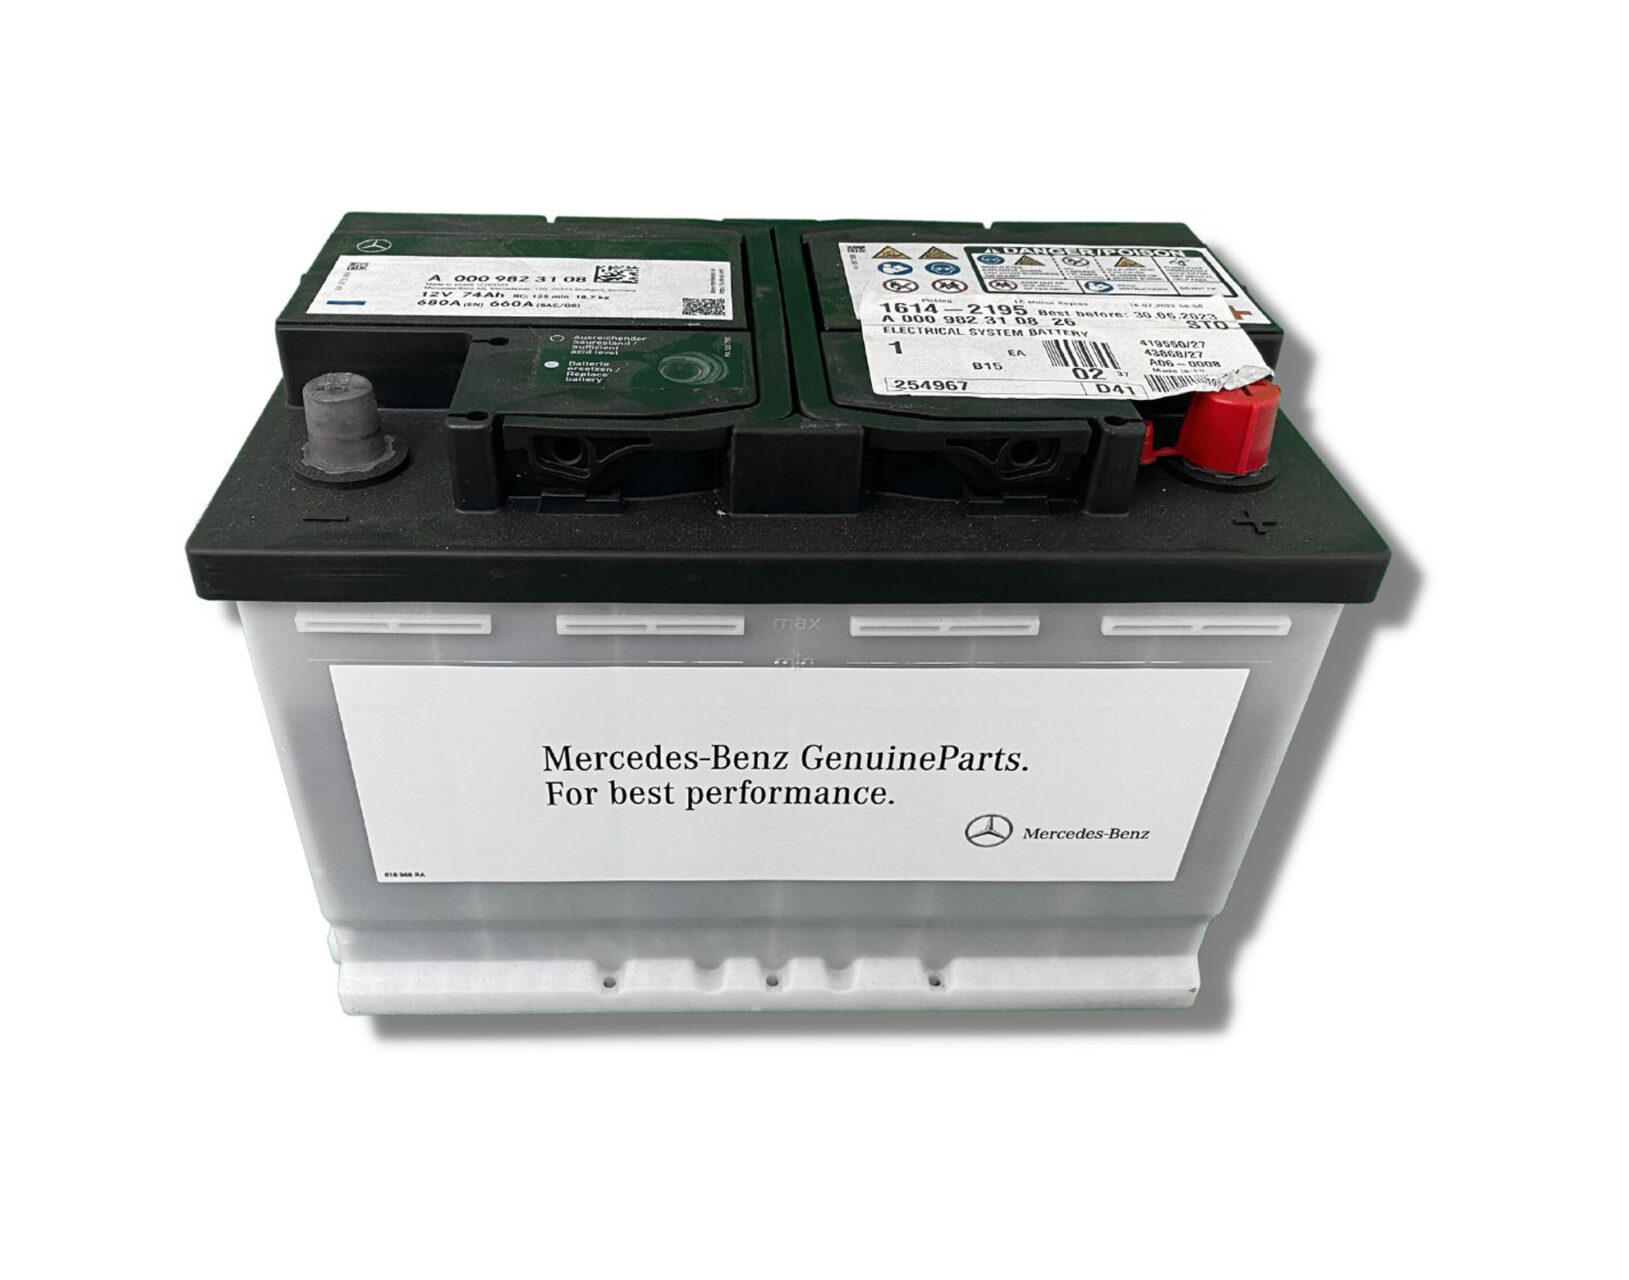 Autobatterie Service - Original Mercedes Autobatterie